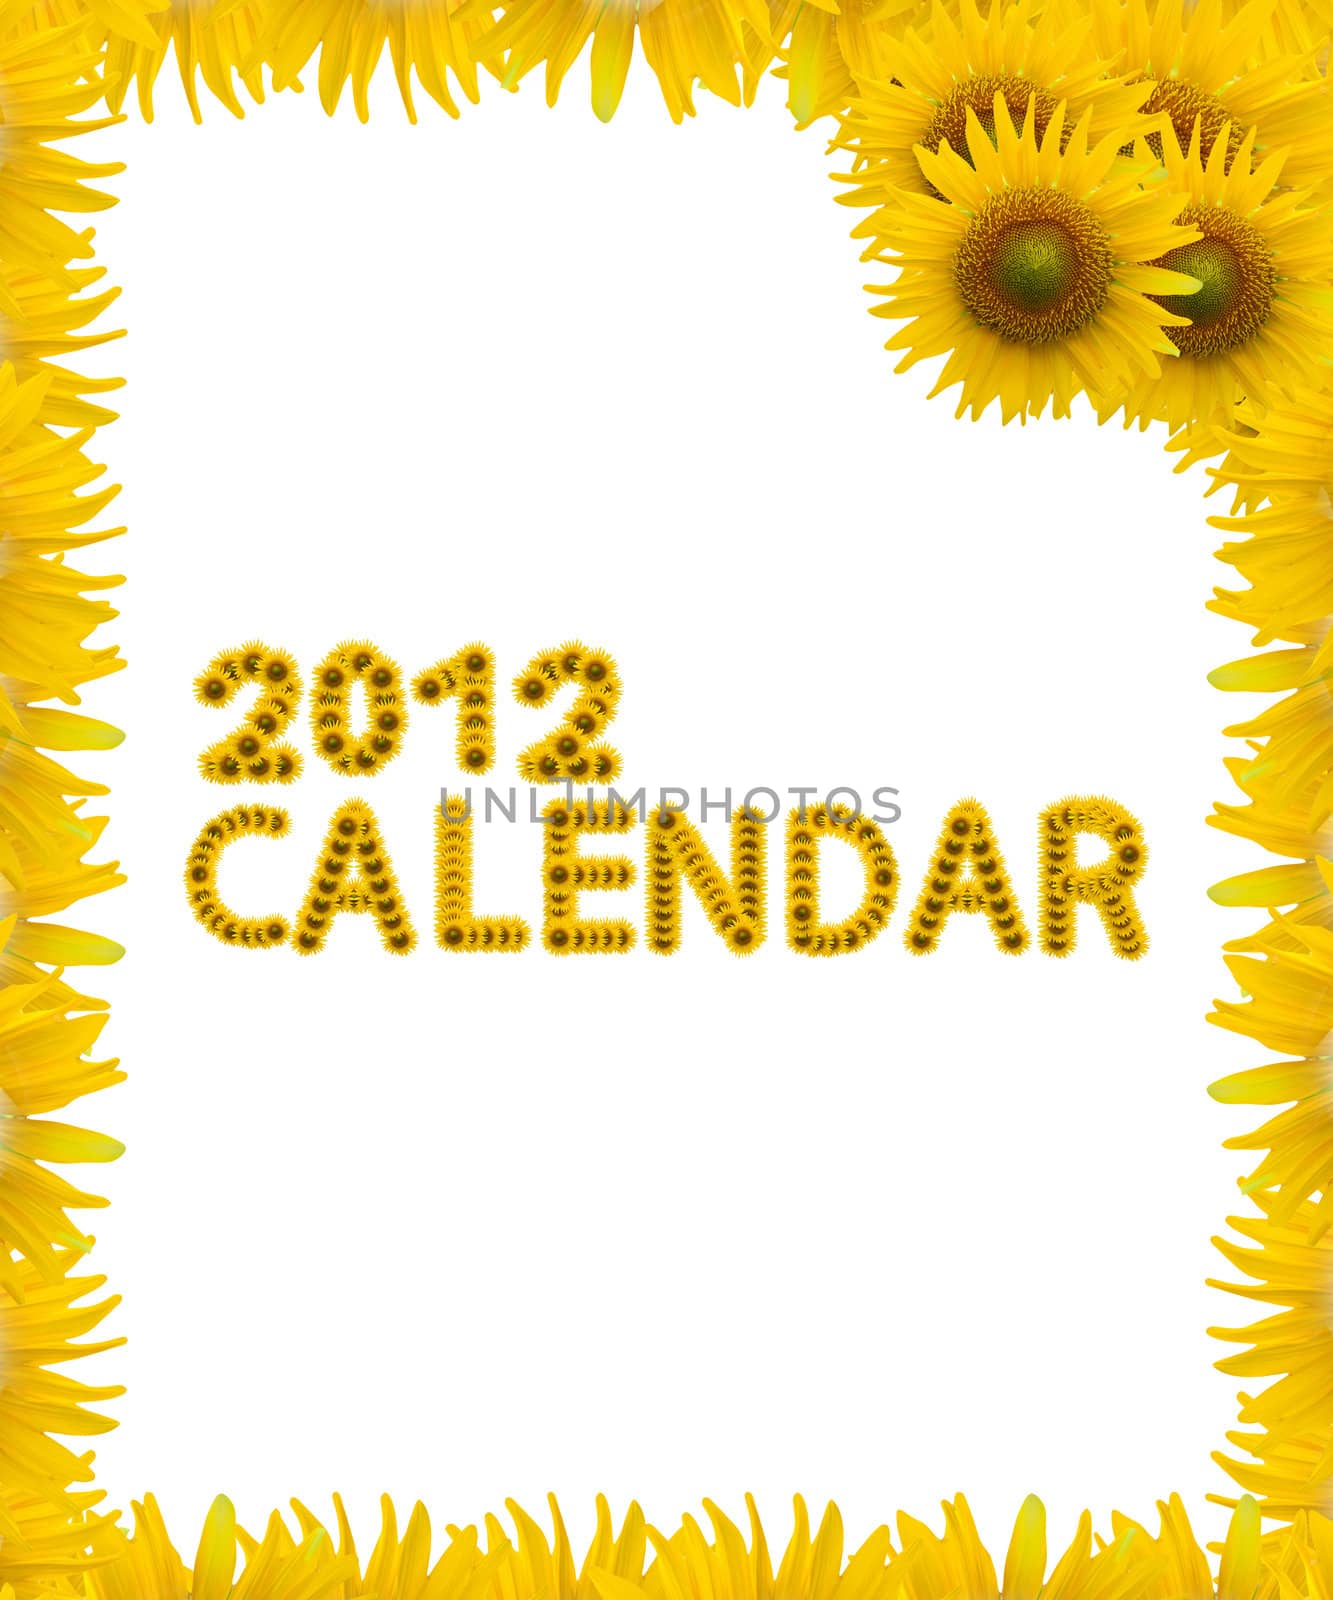 2012 year calendar with Sunflowerand  frame design